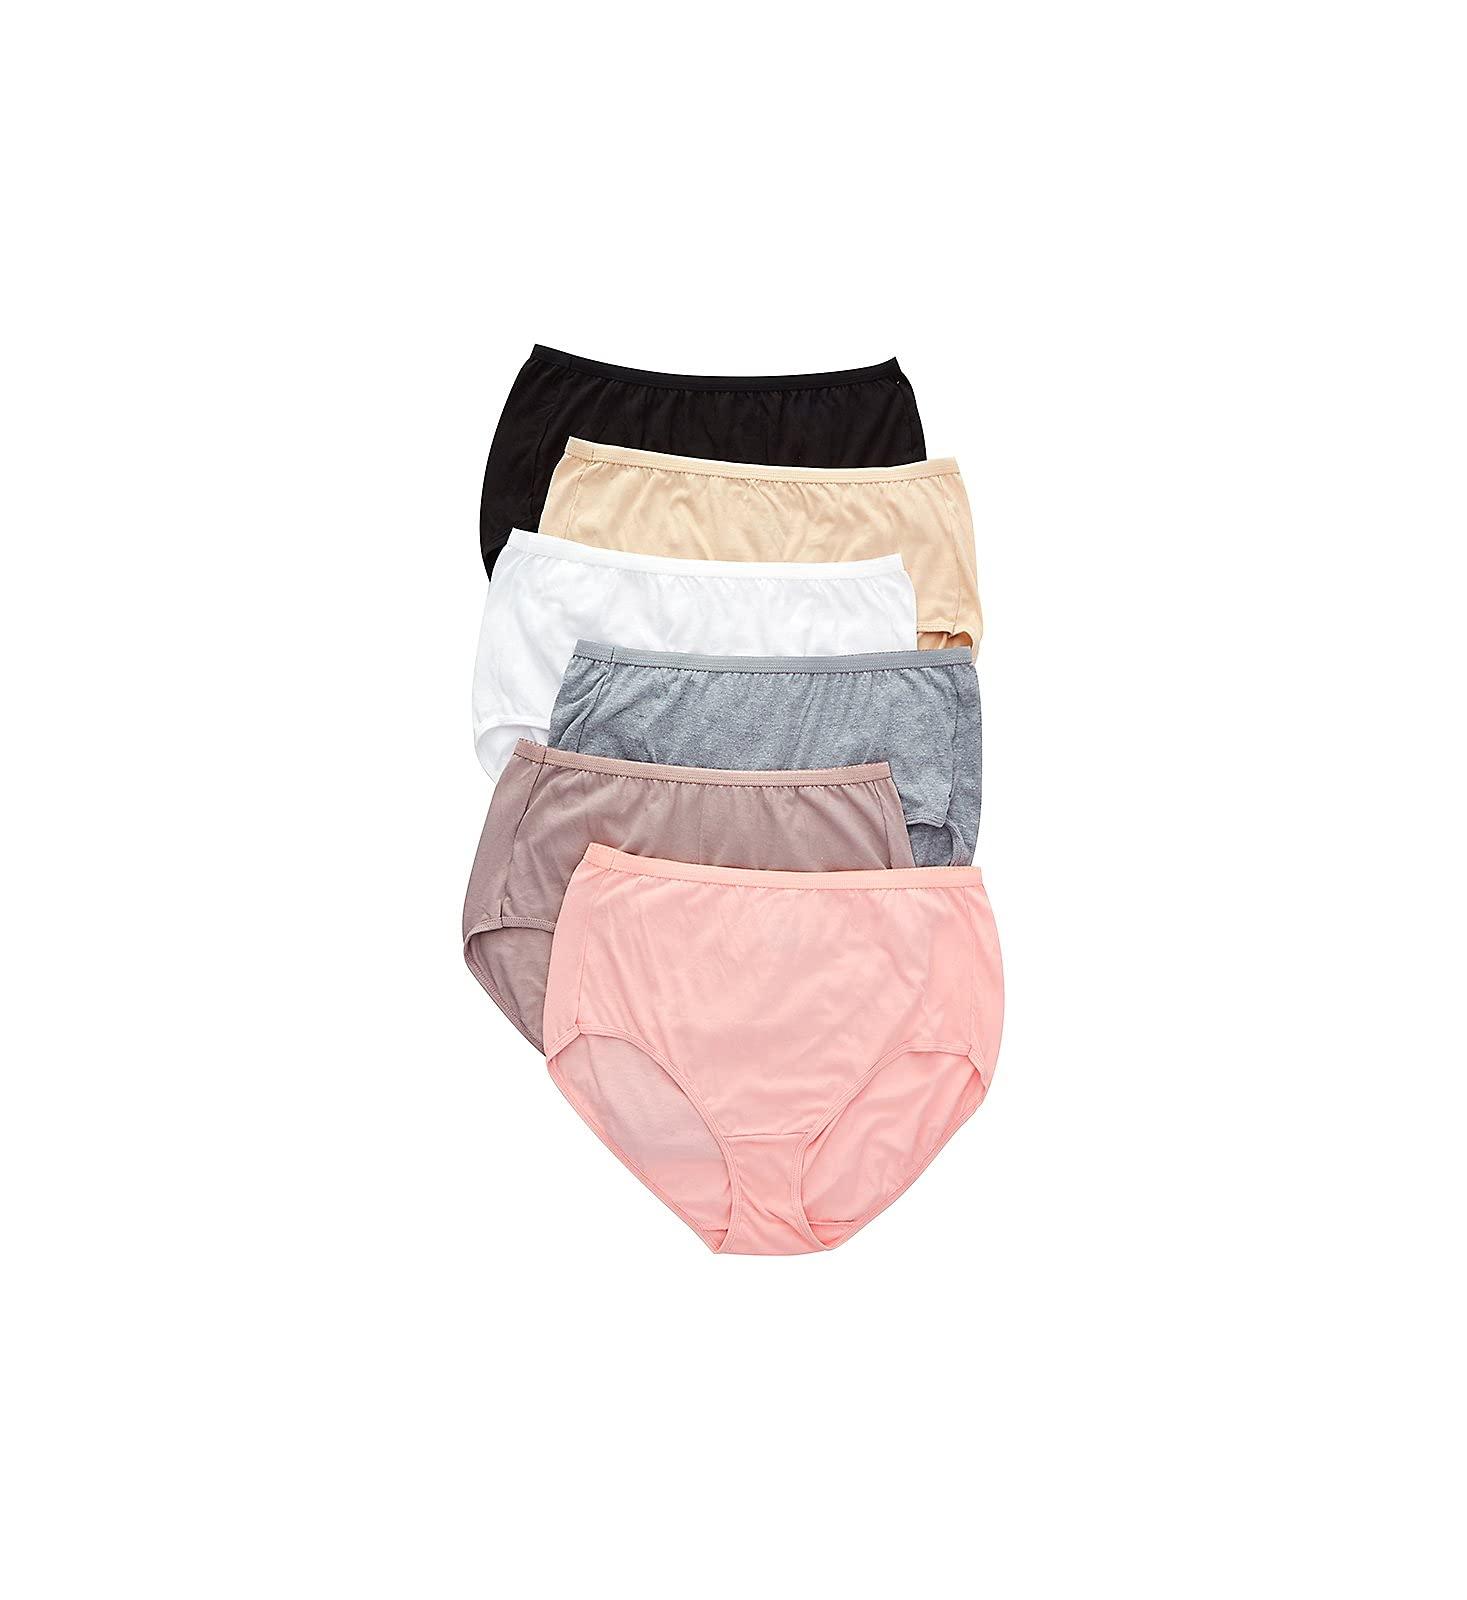 https://cdna.lystit.com/photos/amazon/666d1c84/hanes-SolidPrint-Mix-Plus-Just-My-Size-Waist-Cotton-Underwear.jpeg